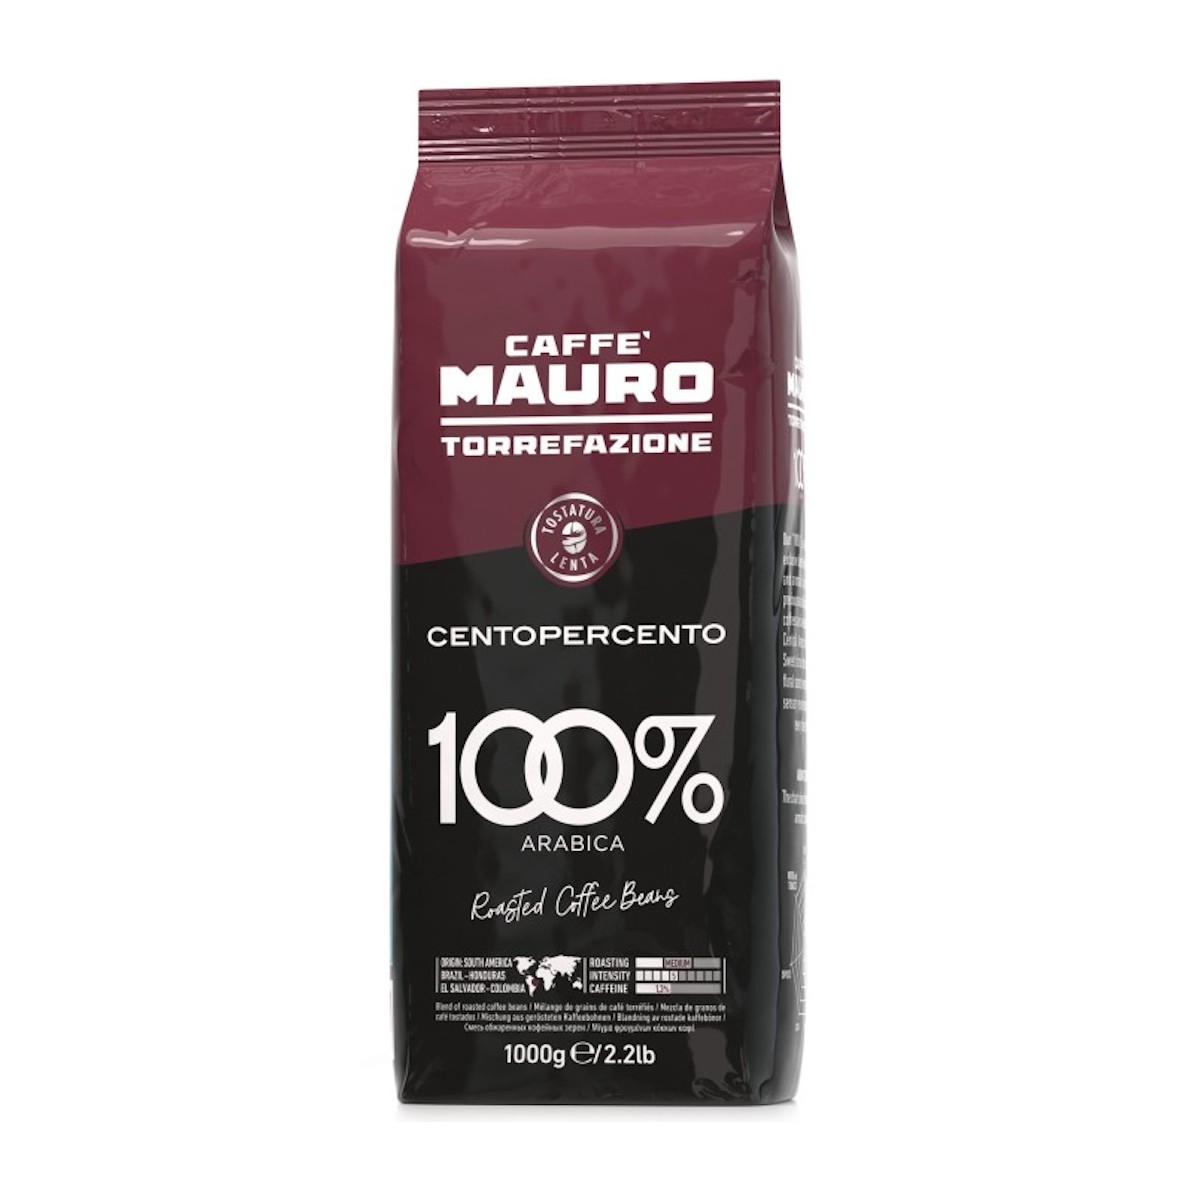 MAURO CENTOPERCENTO coffee beans - 1kg